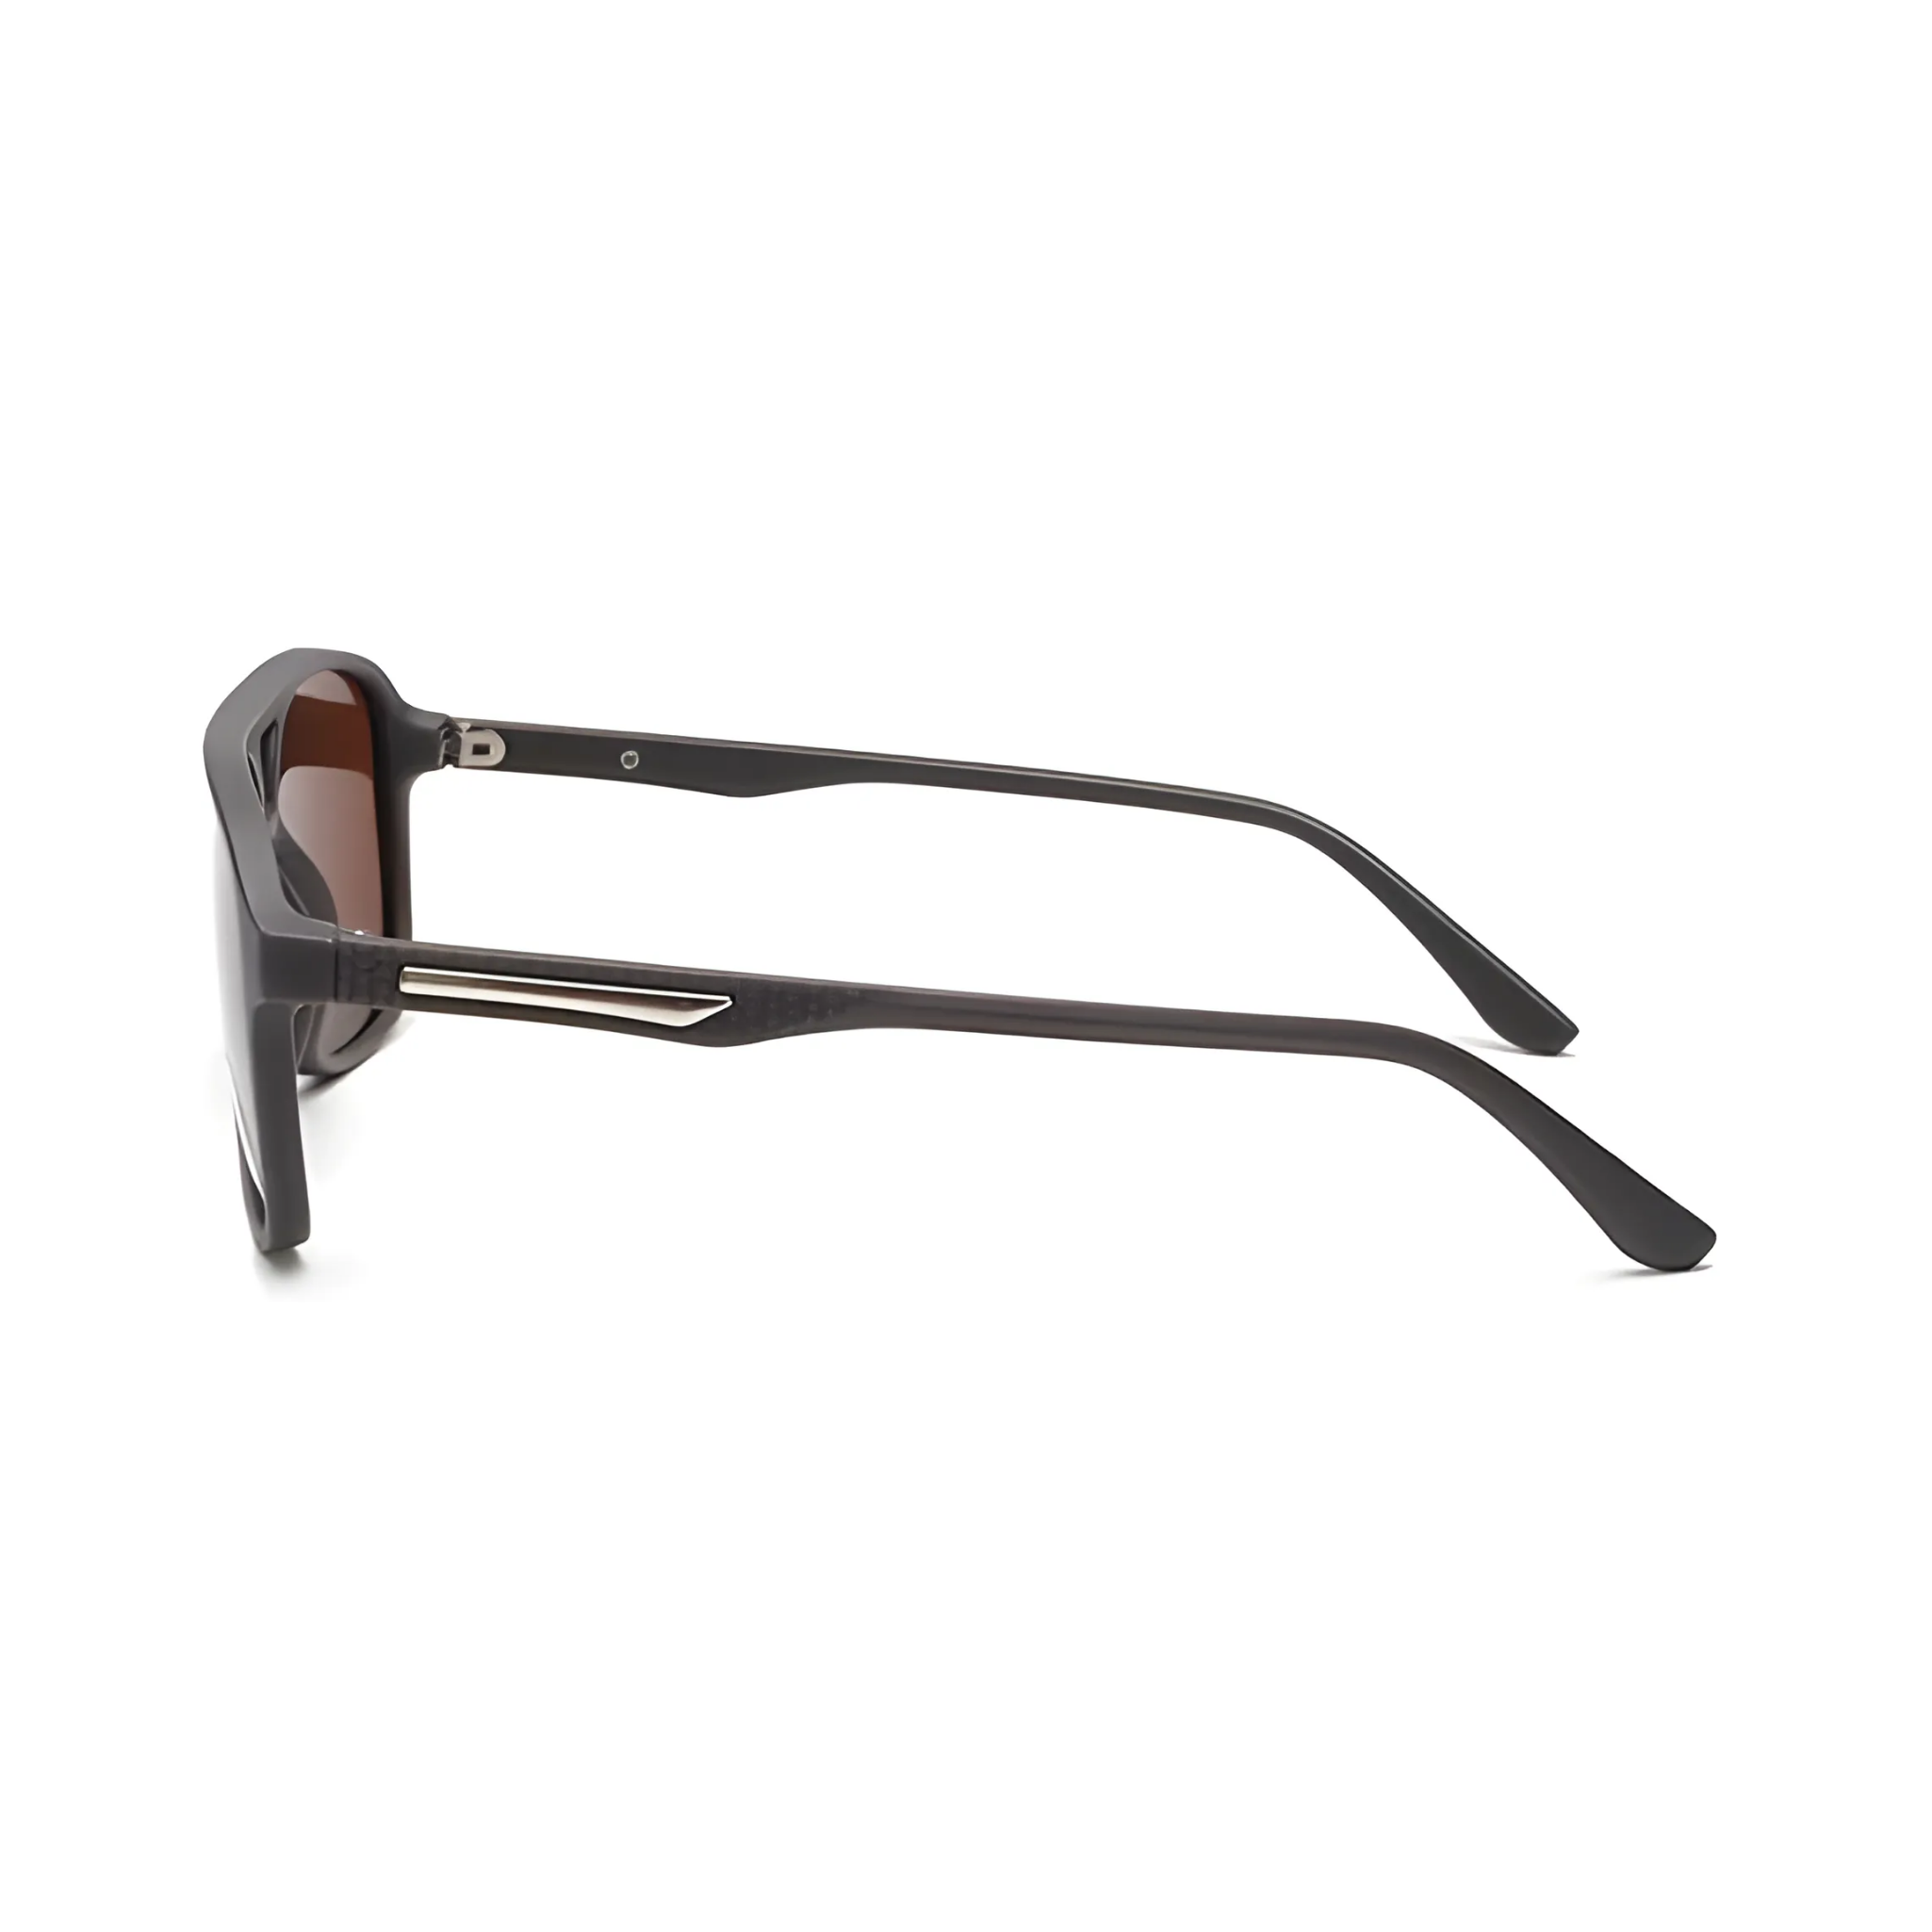 Klassic Series Rectangle Polarized & UV Protected Sunglasses Matte Grey Frame & Brown Lenses